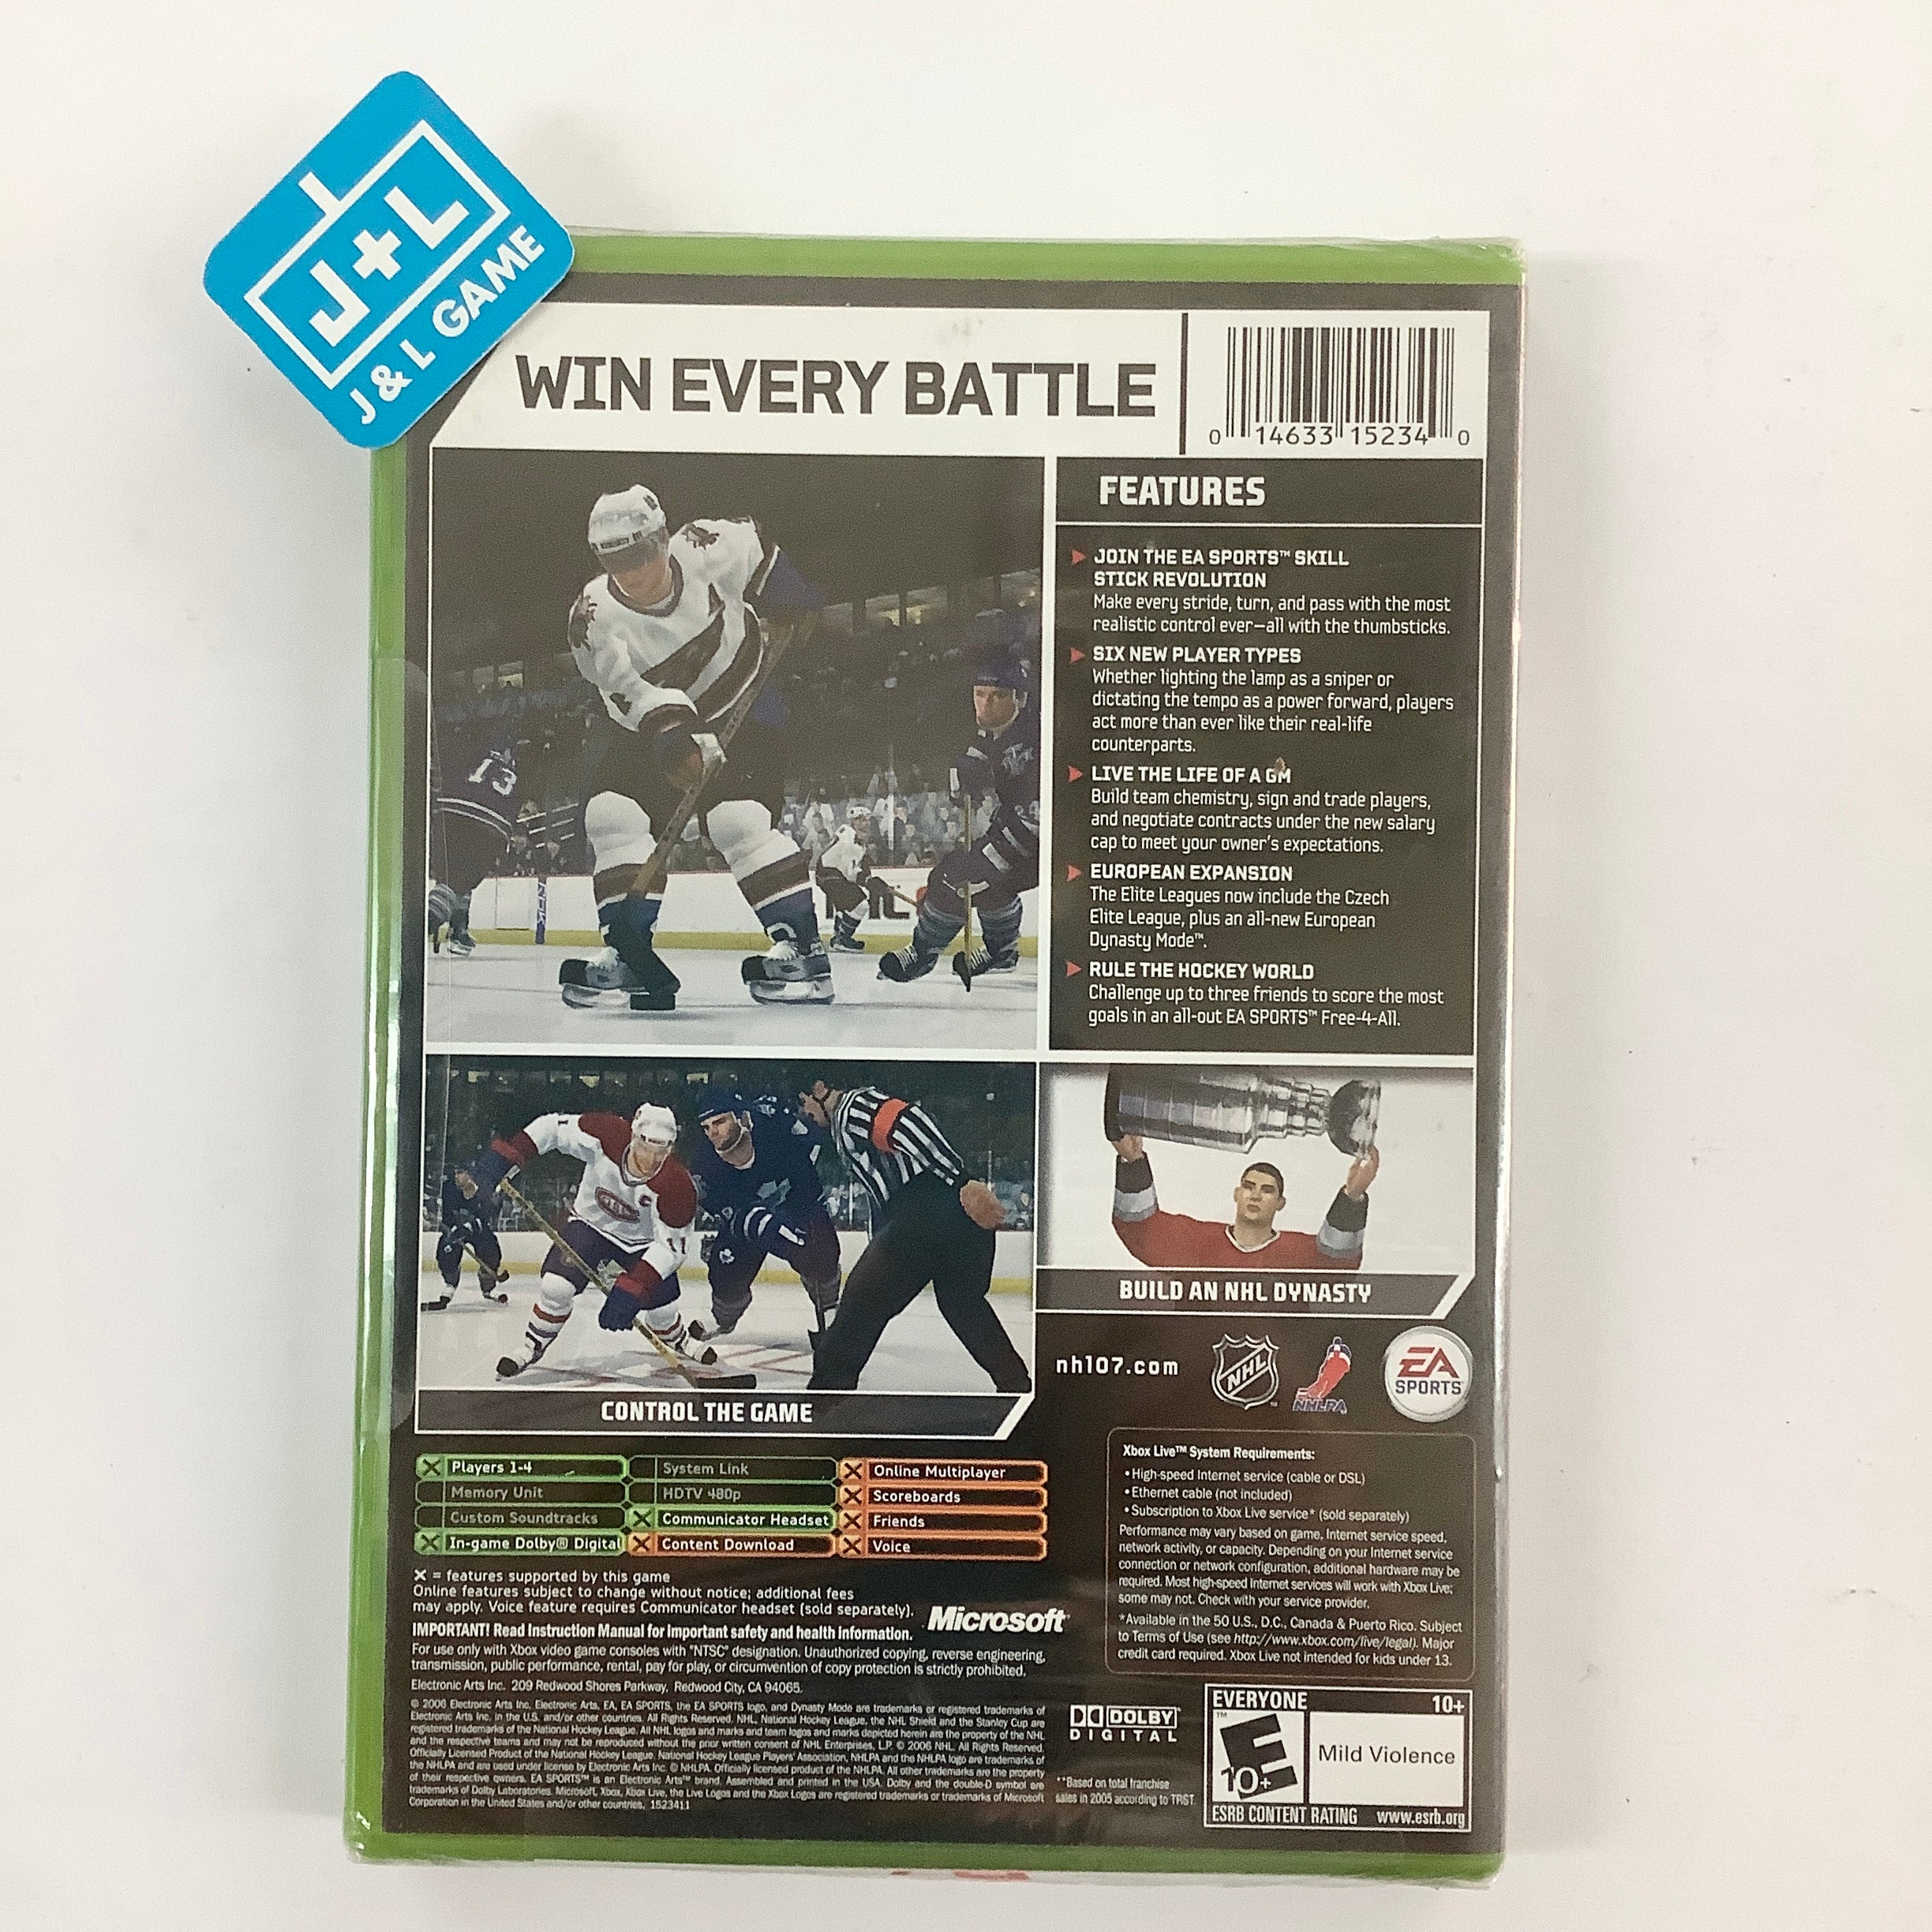 NHL 07 - (XB) Xbox Video Games EA Sports   